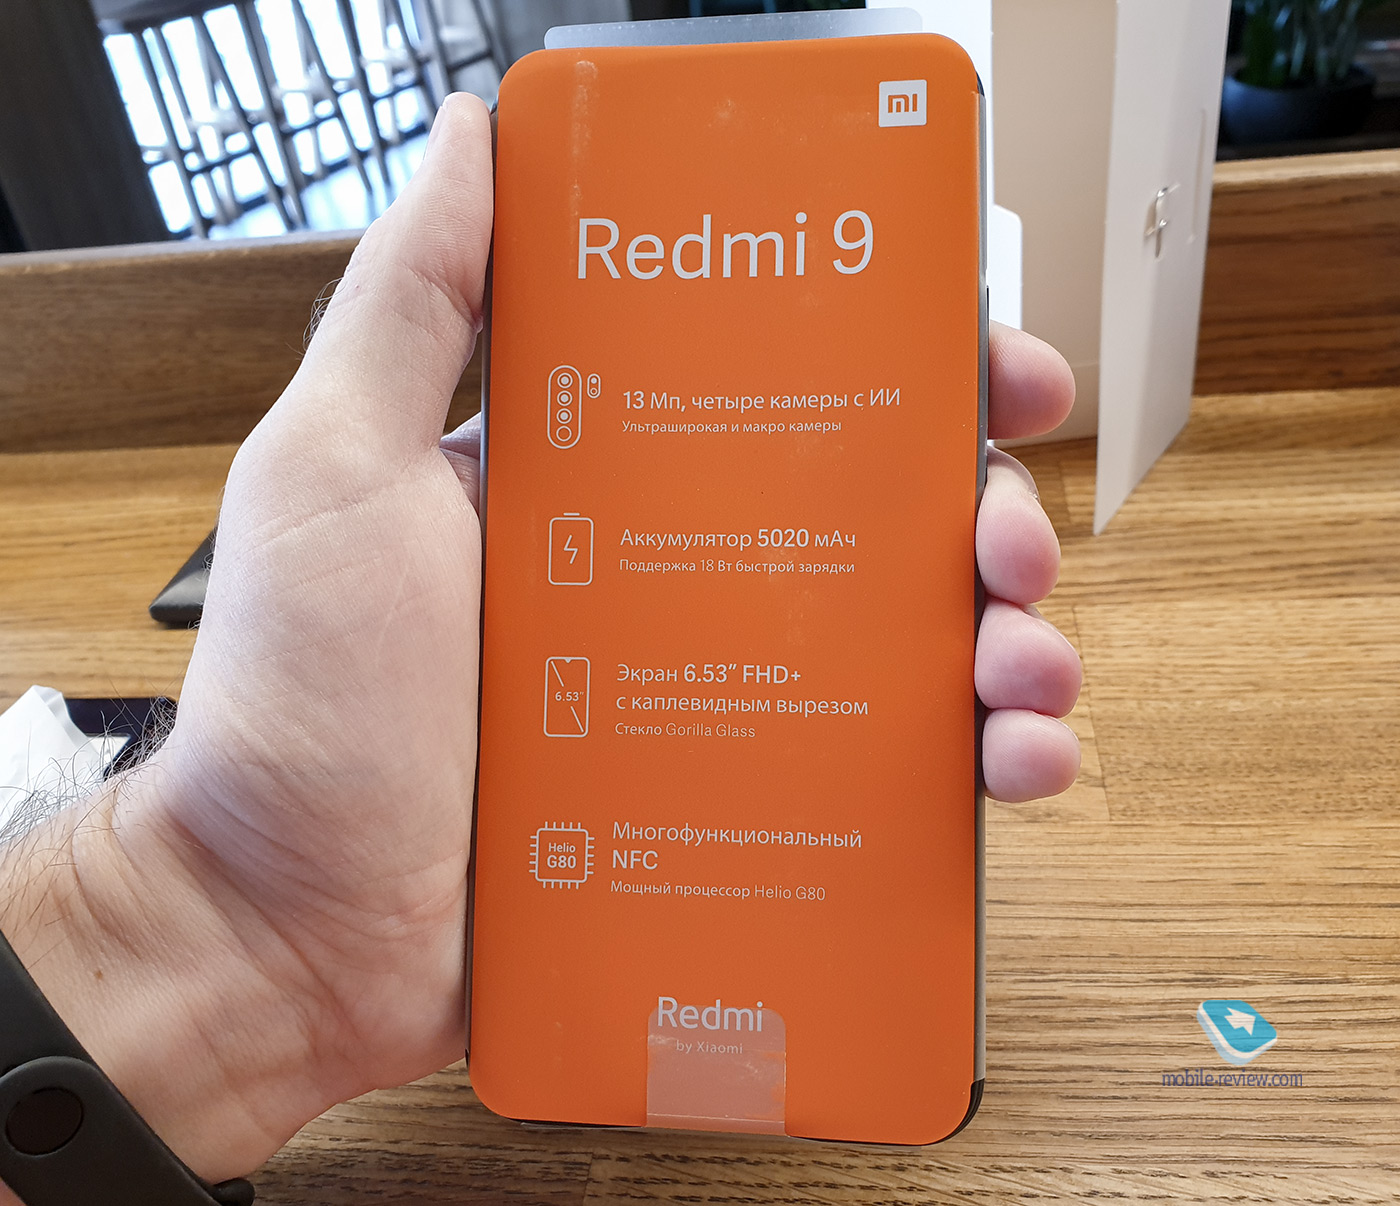 Chances are you'll like: Xiaomi Redmi 9